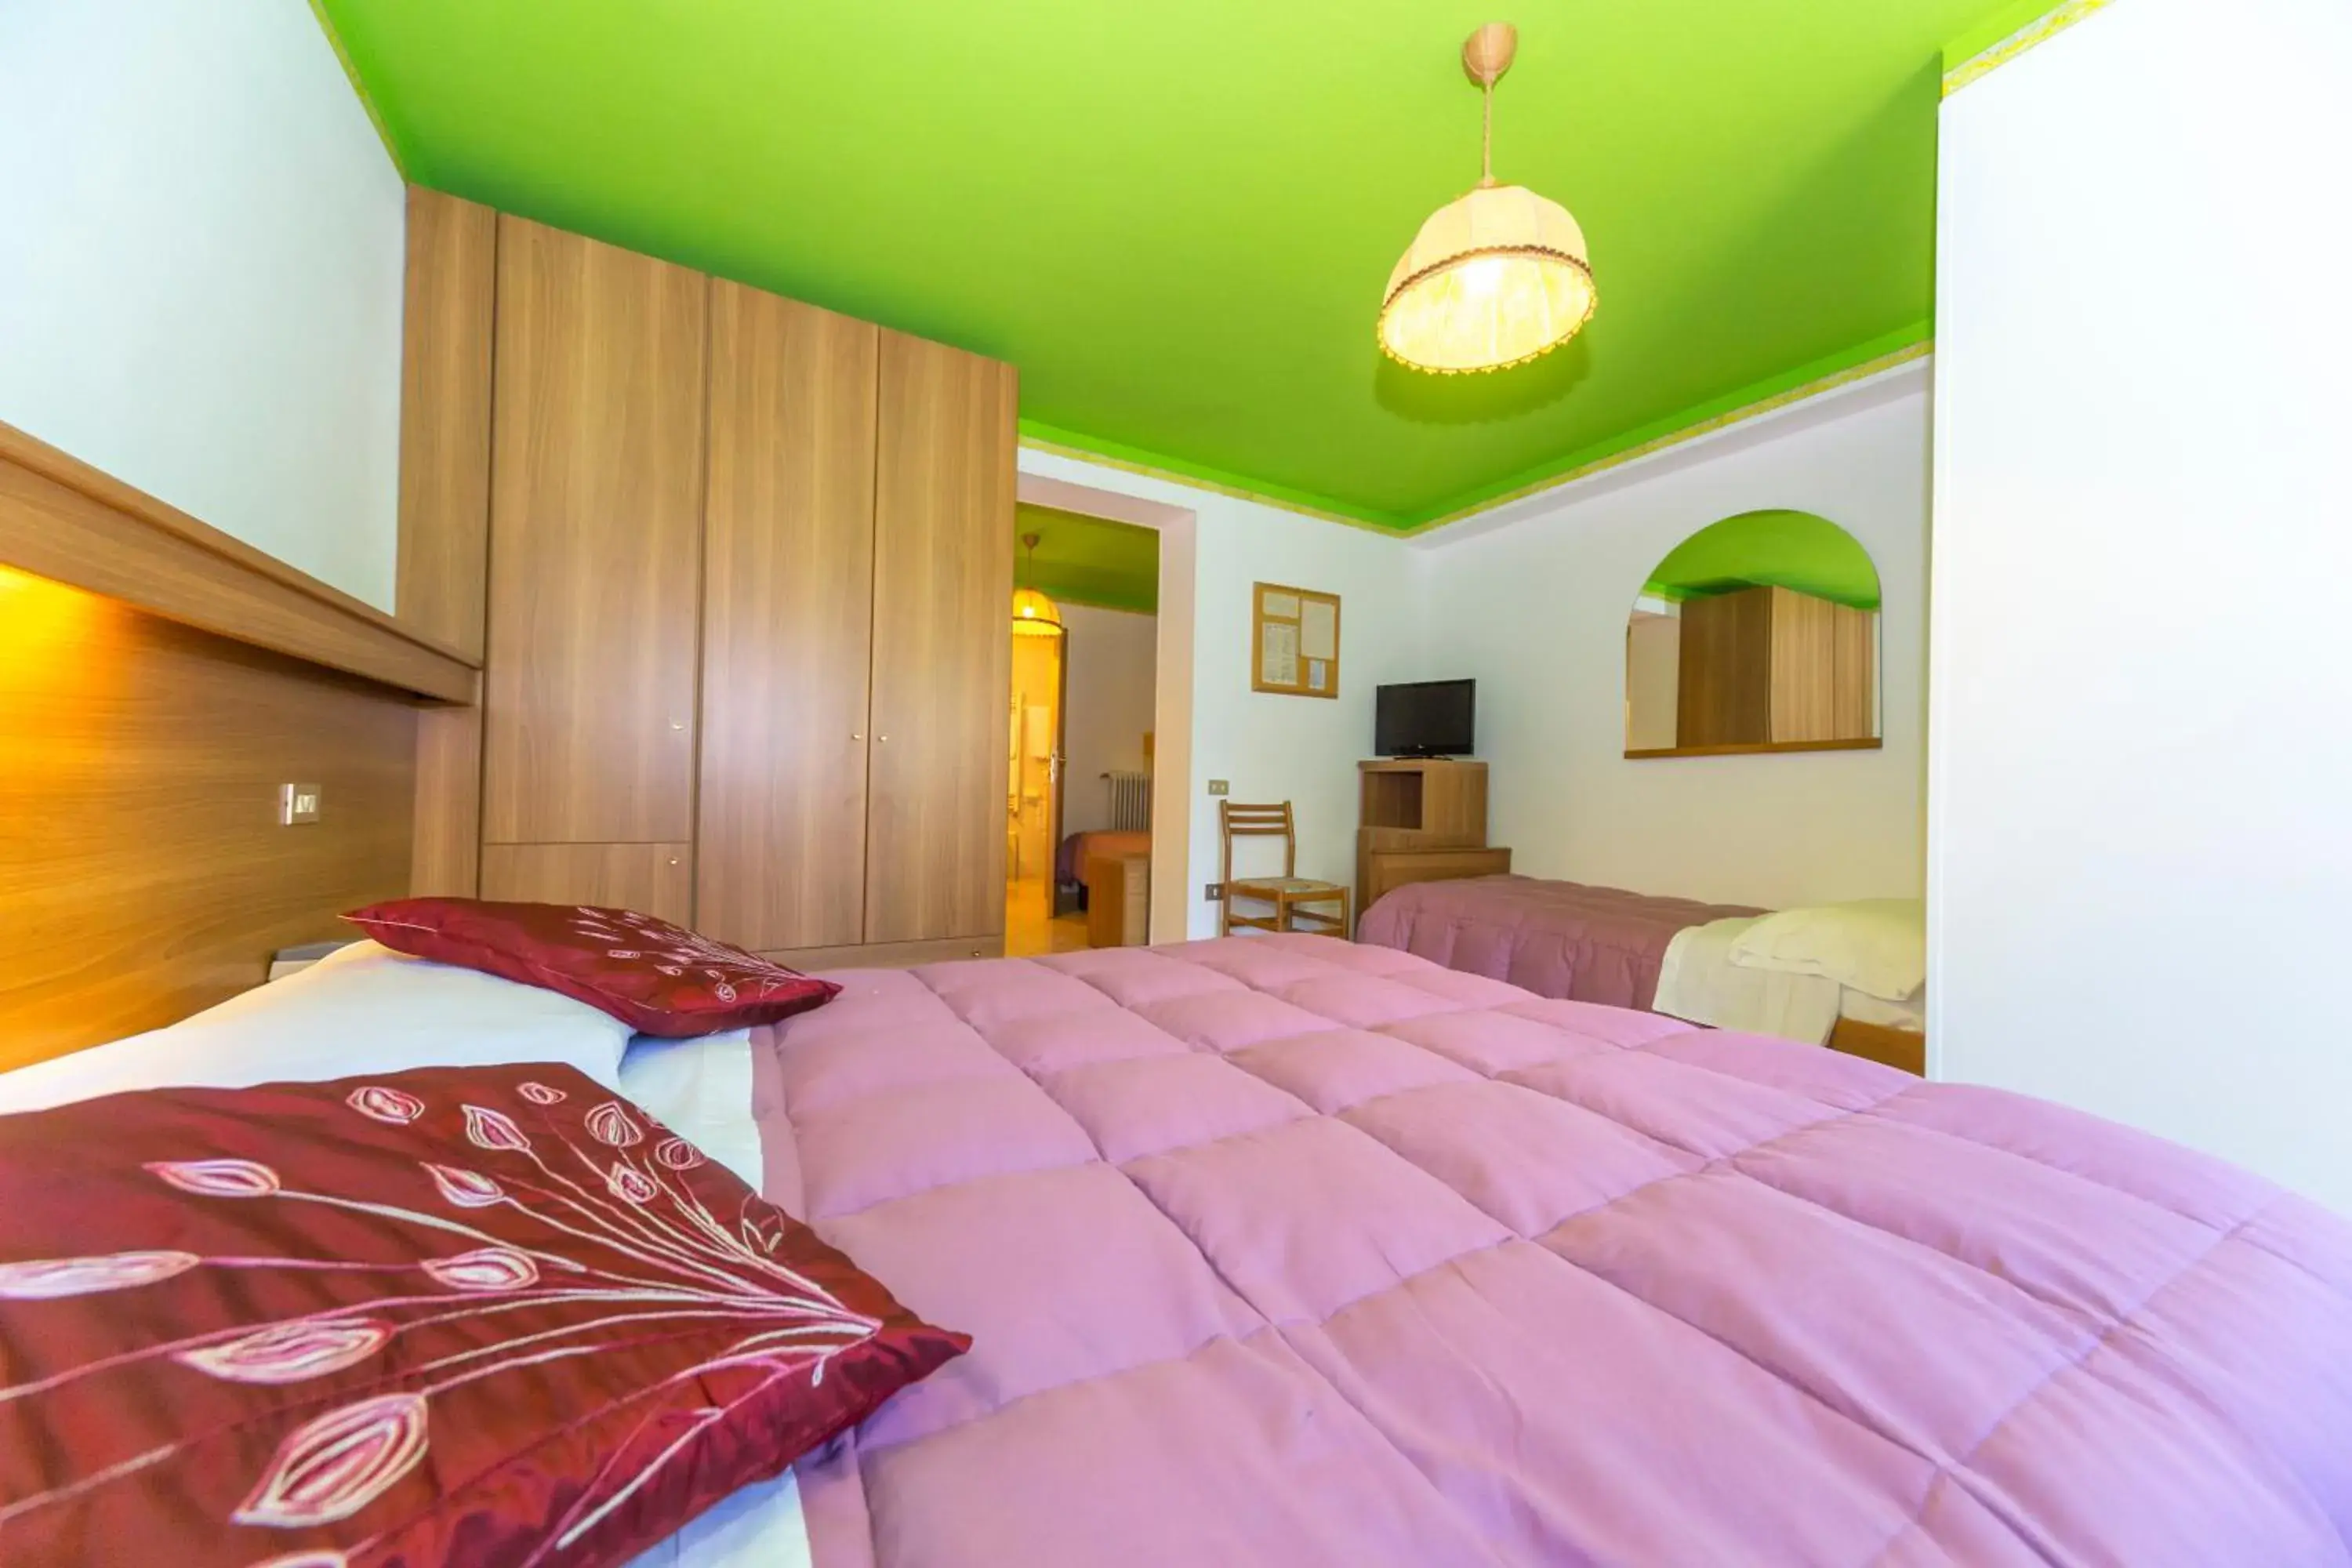 Bedroom, Room Photo in Hotel Trentino